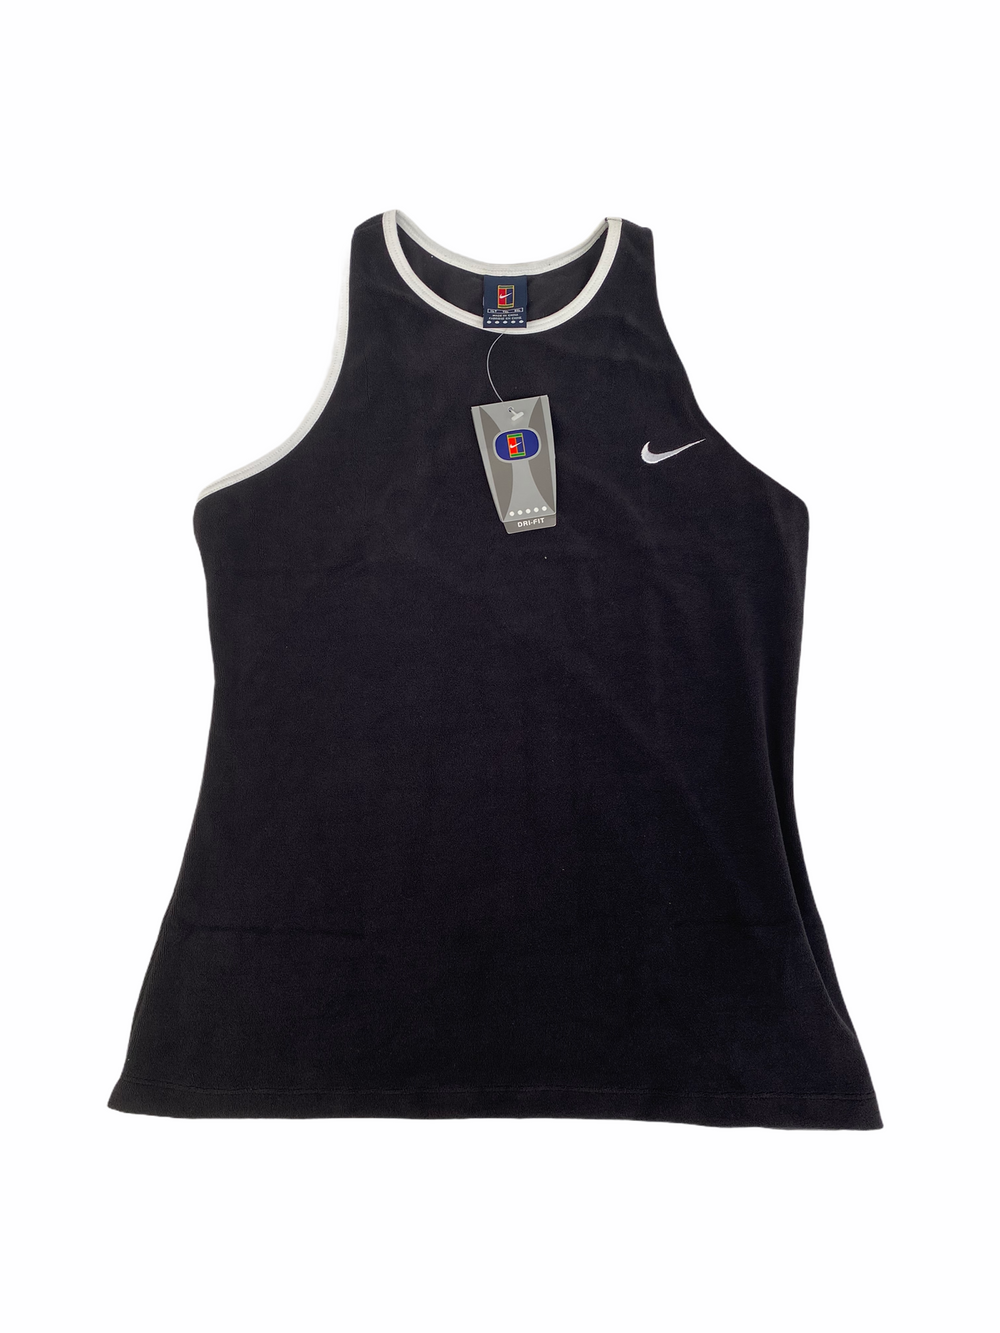 Vintage Nike tennis court tank top in velvet / corduroy - Not In Your Wardrobe™ - [Vendor]